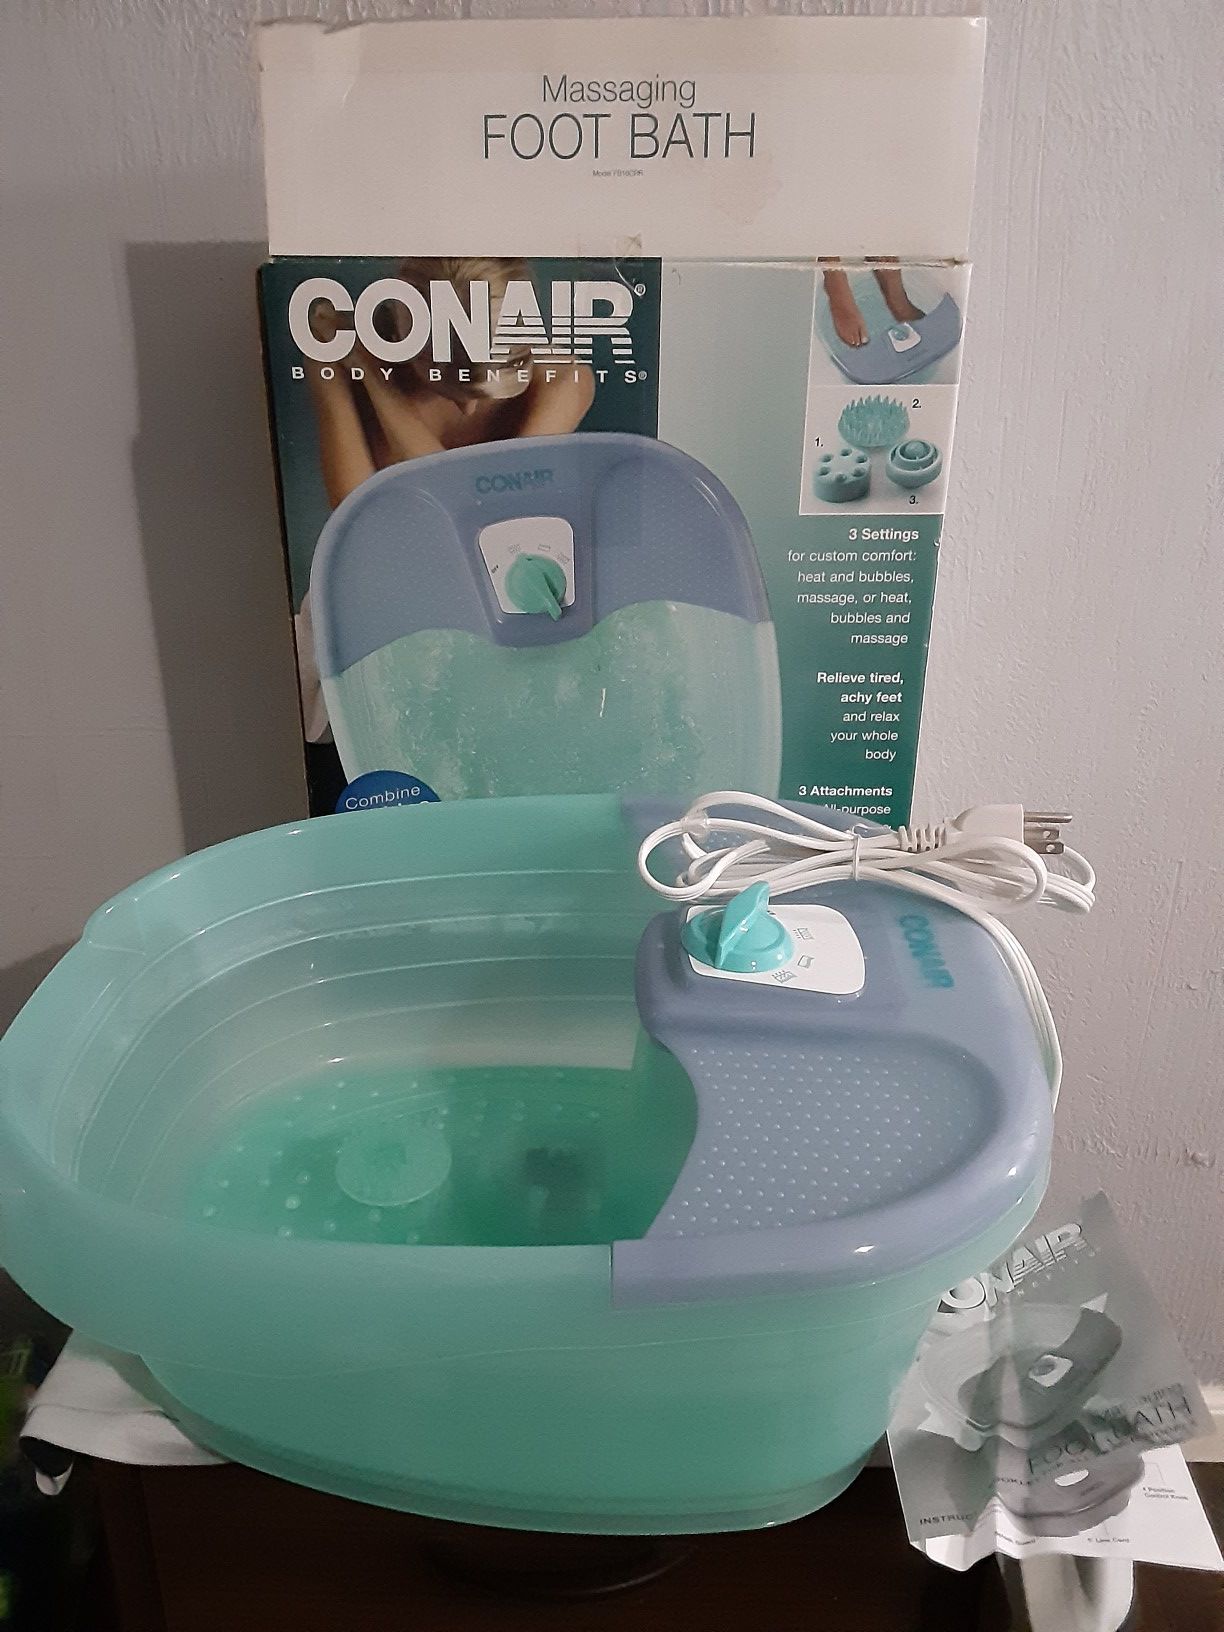 Conair body benefits massaging foot bath